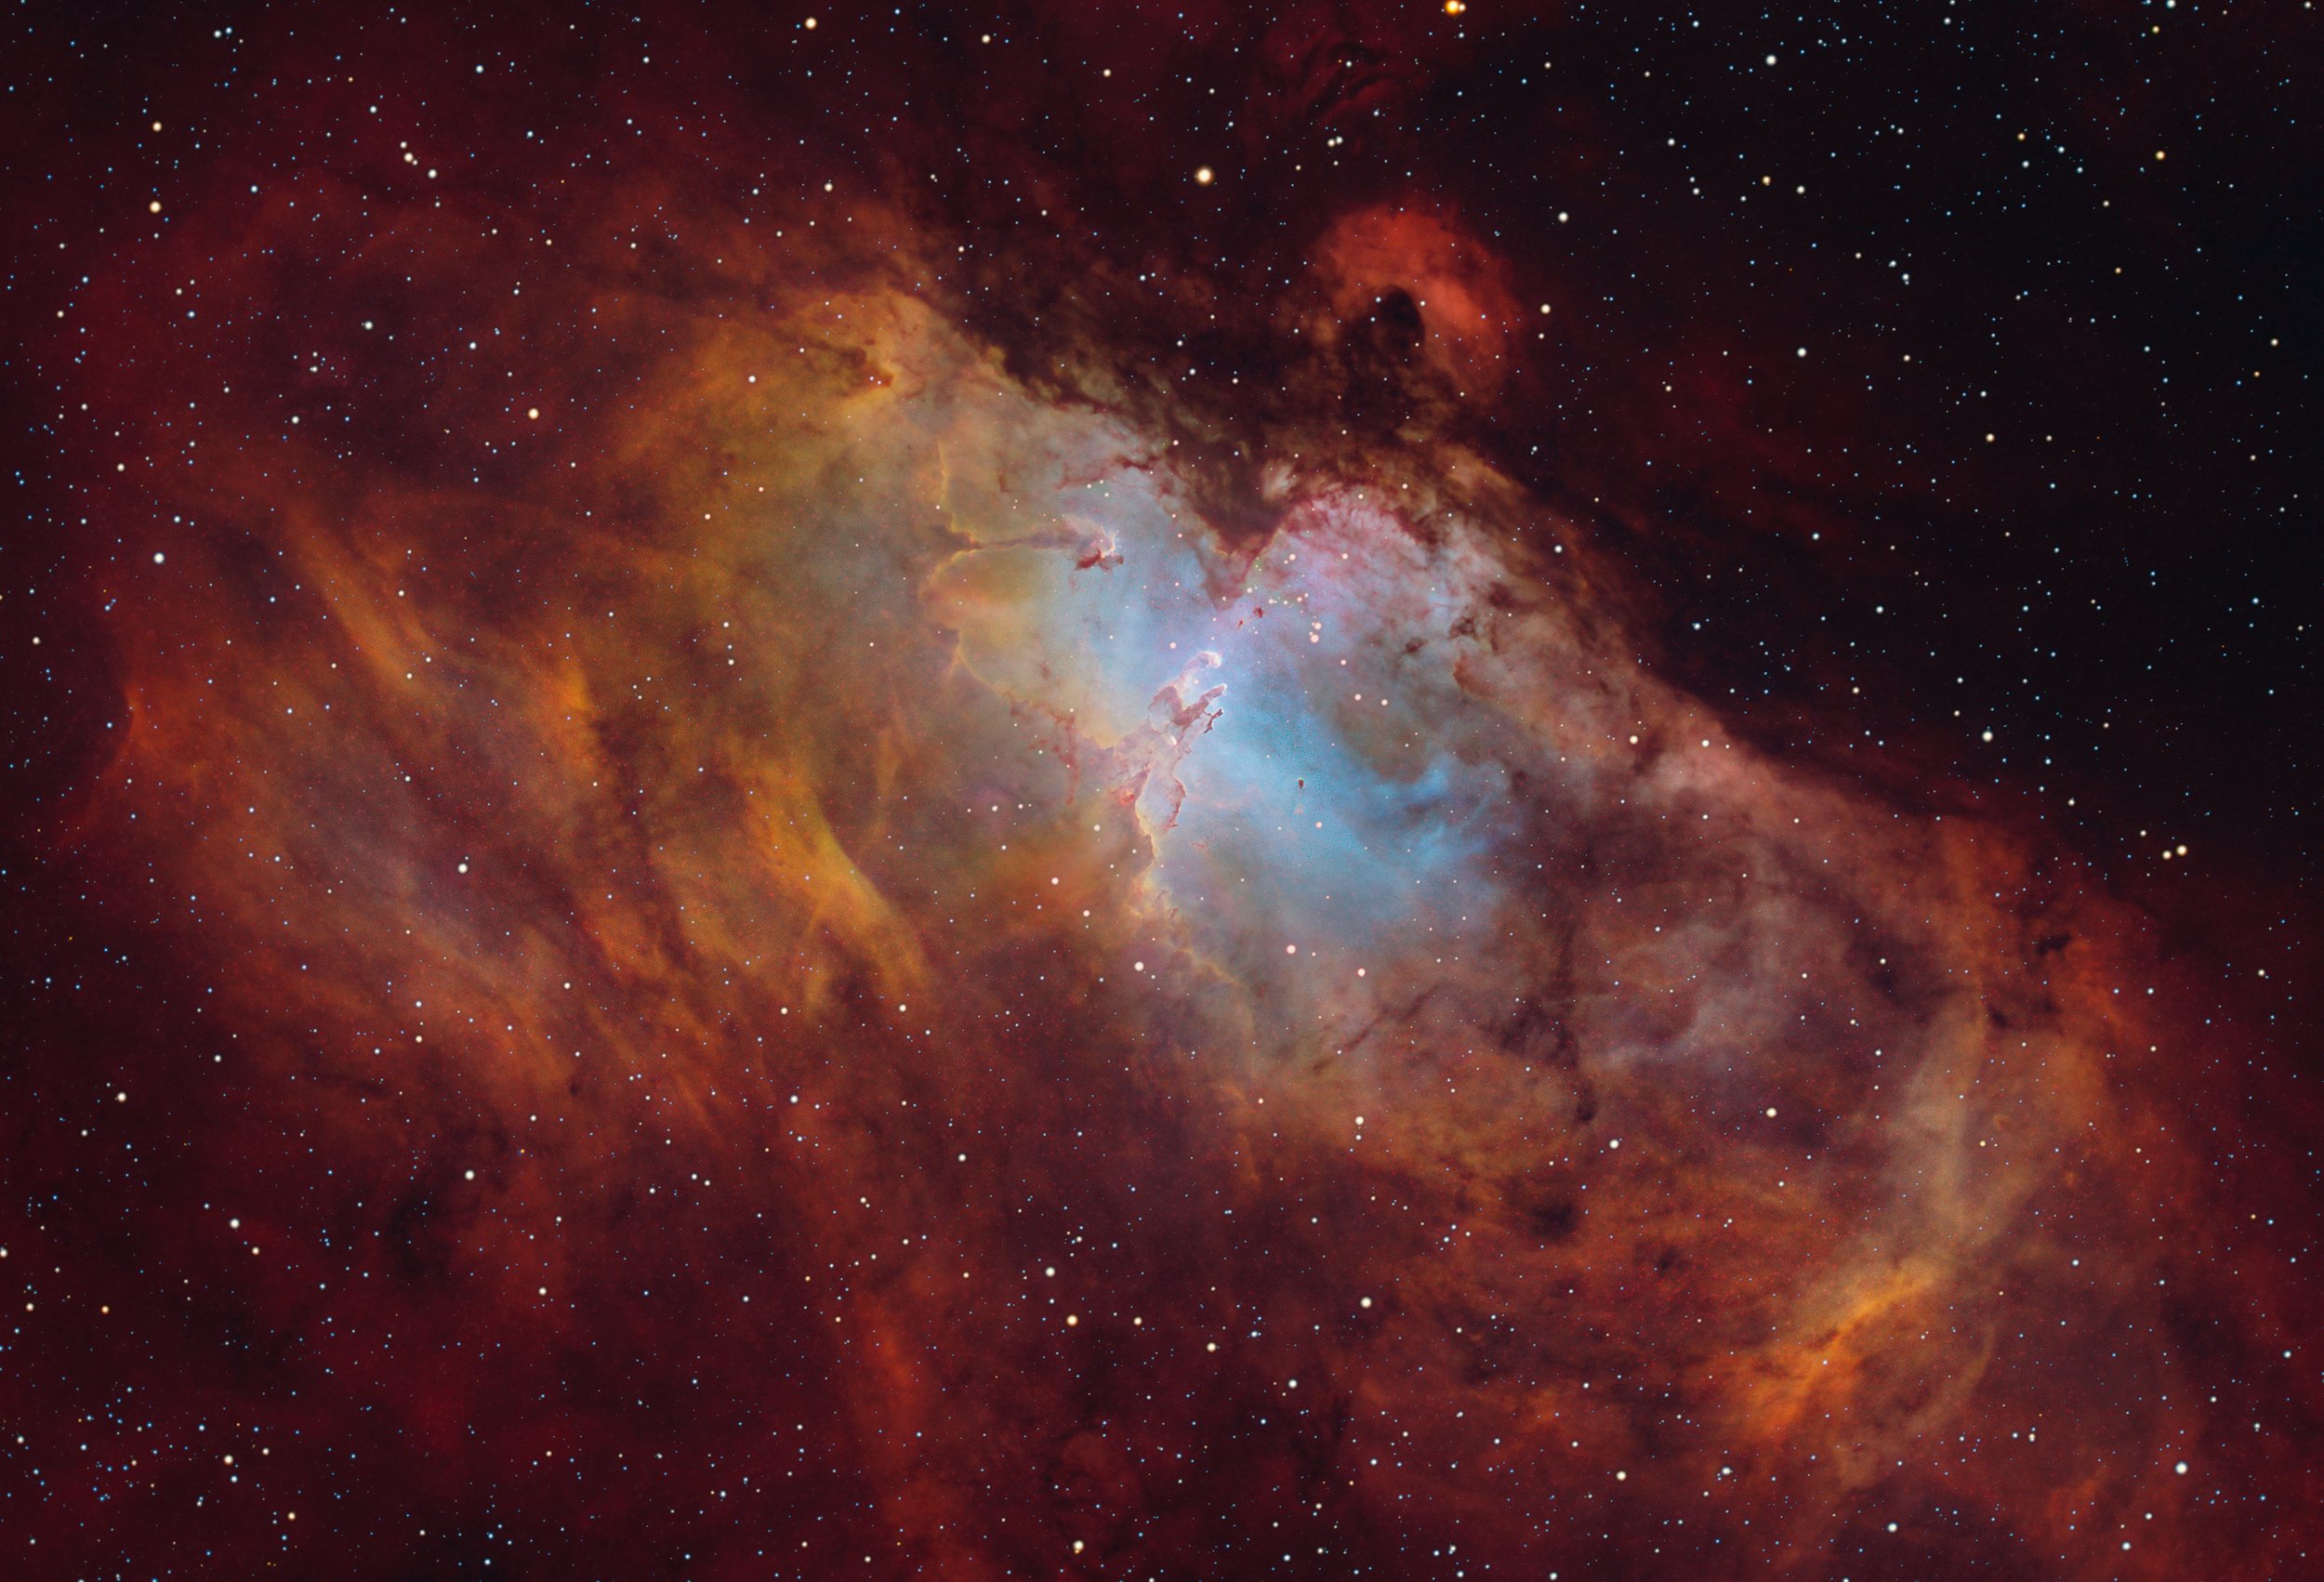 A new interpretation of the M16 Eagle Nebula data, home to the "Pillars of Creation"